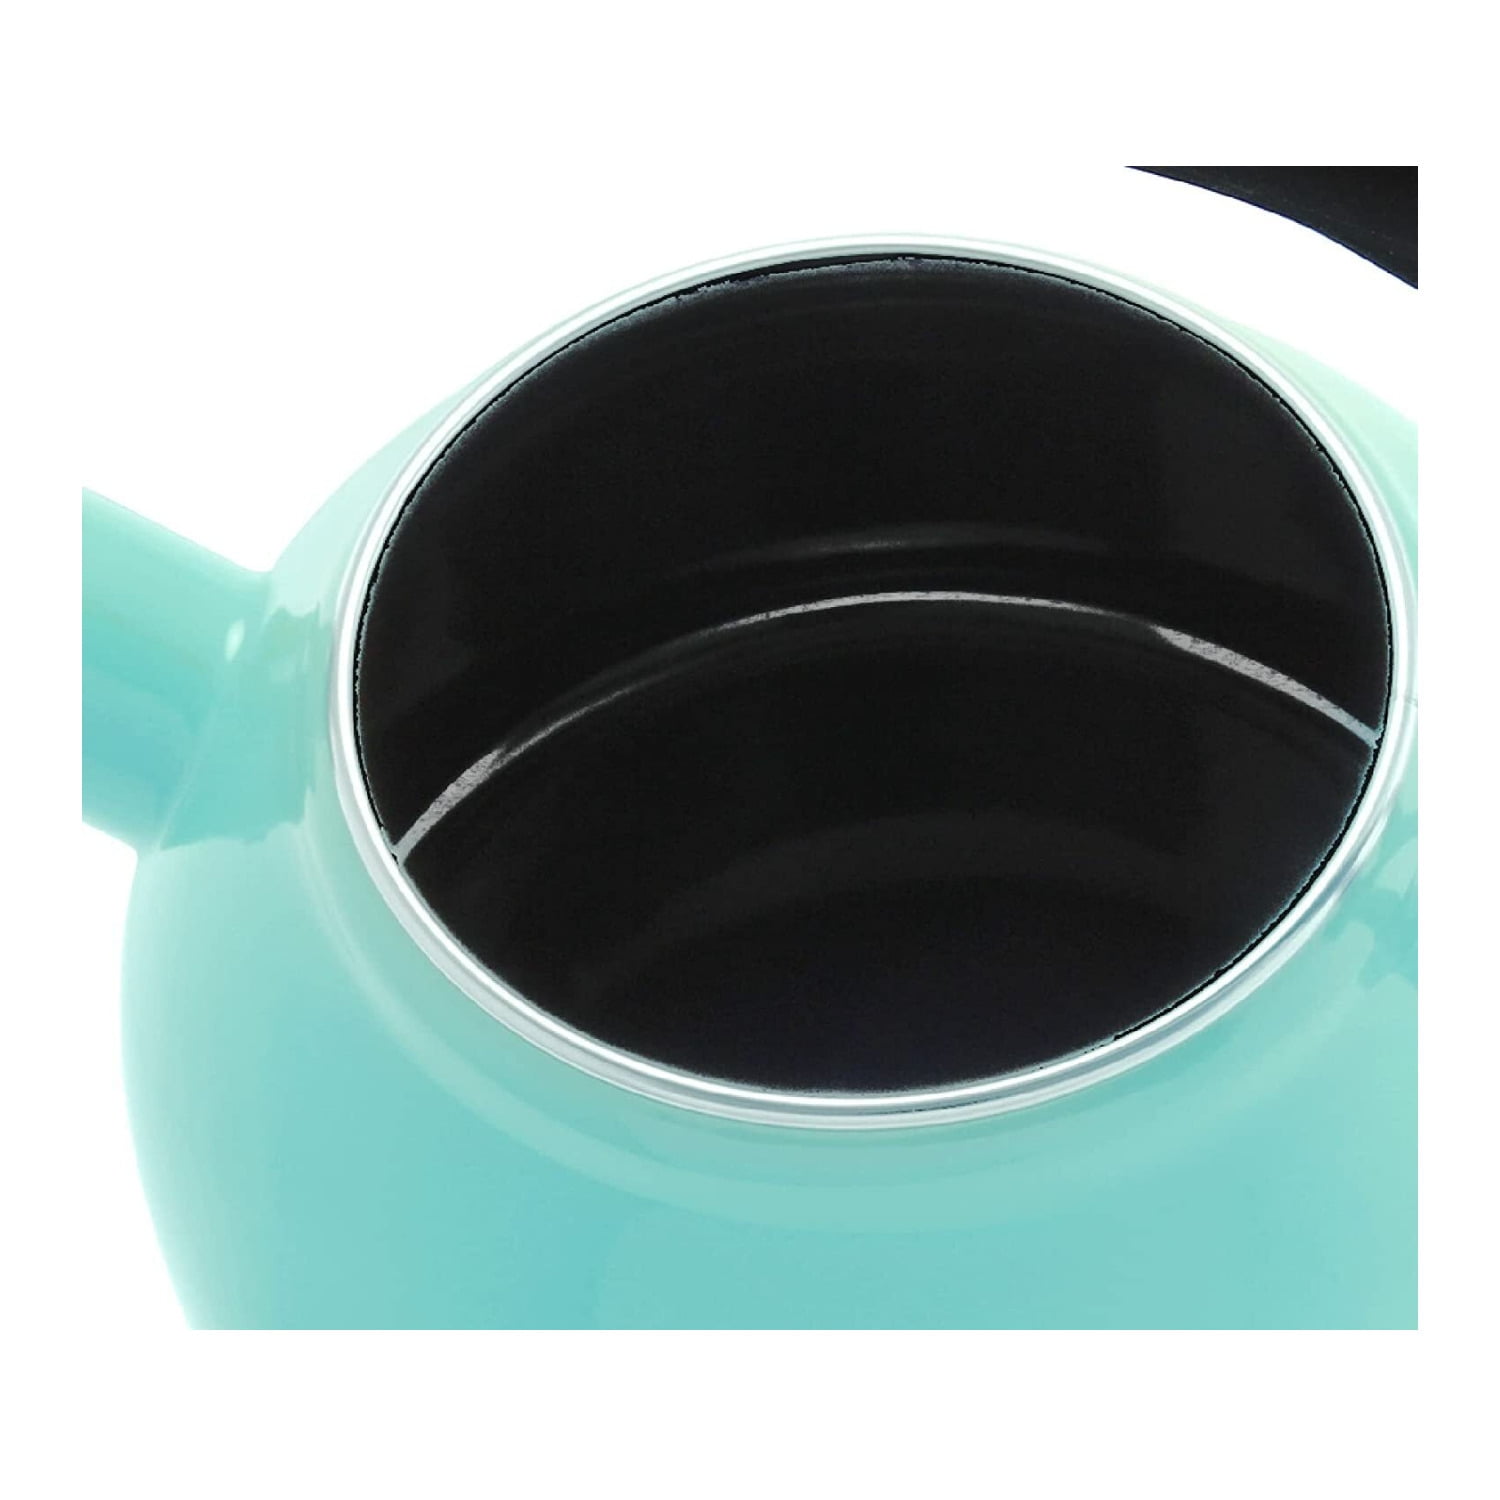 Chantal Ceylon Enamel-on-steel Whistling Tea Kettle (1.6-quart, Aqua) :  Target